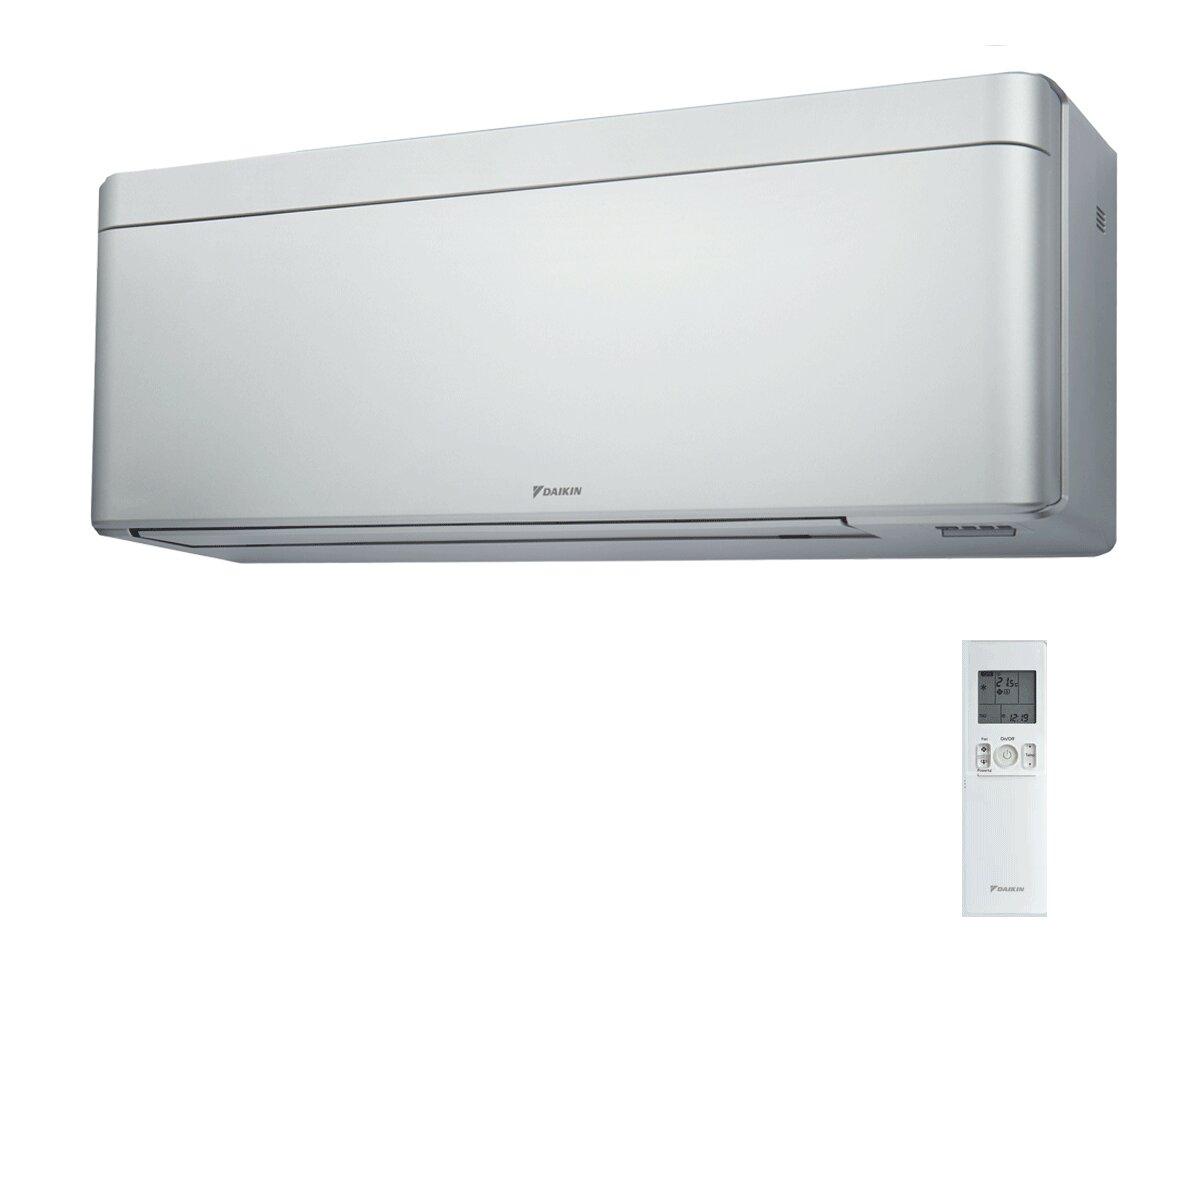 Daikin Stylish Silver dual split air conditioner 7000+18000 BTU inverter A+++ wifi external unit 5 kW